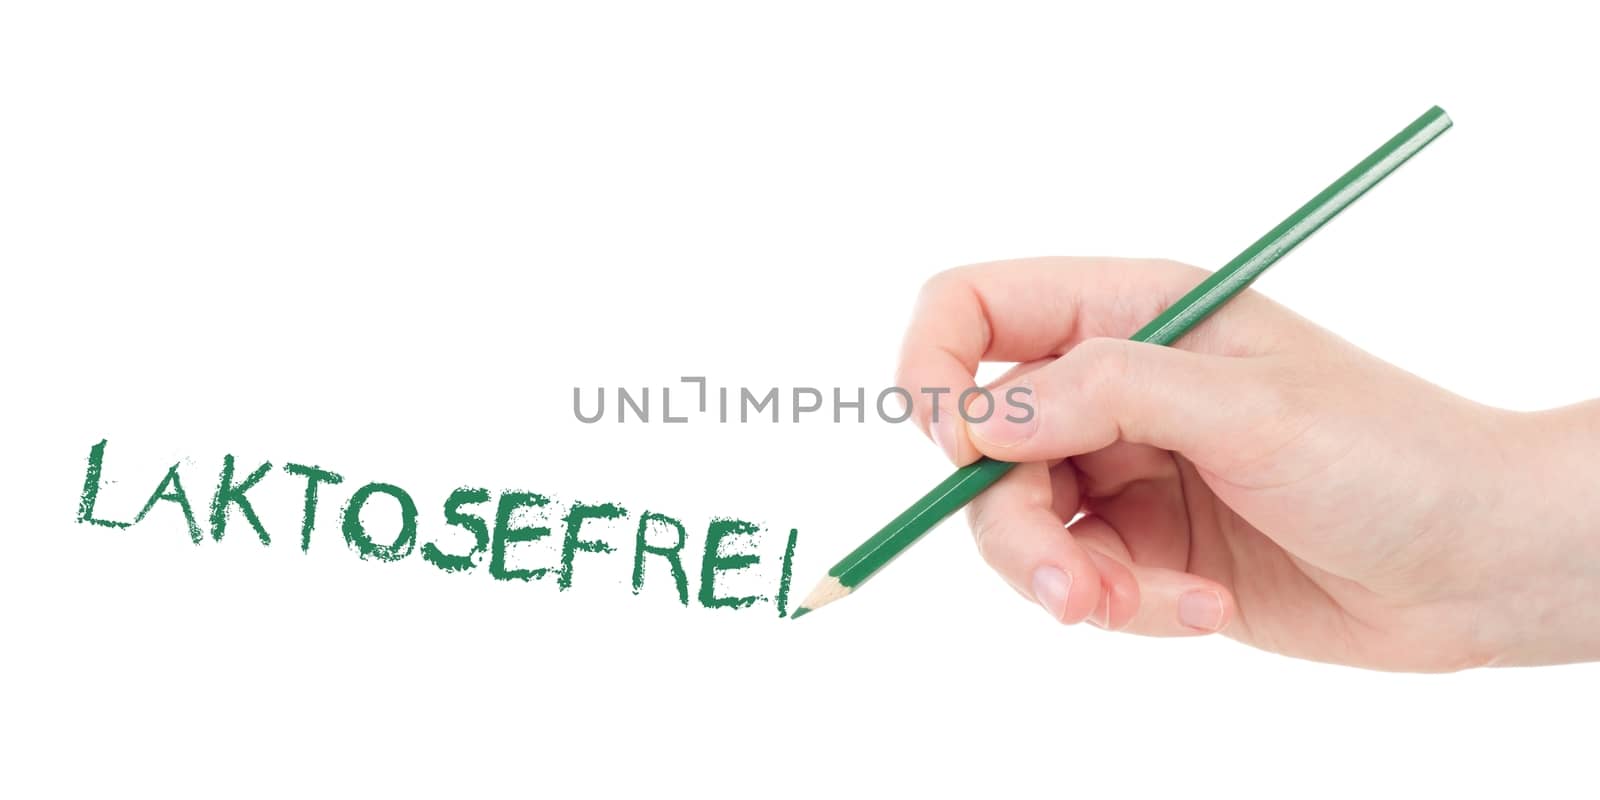 Caucasian hand writing with green laktosefrei